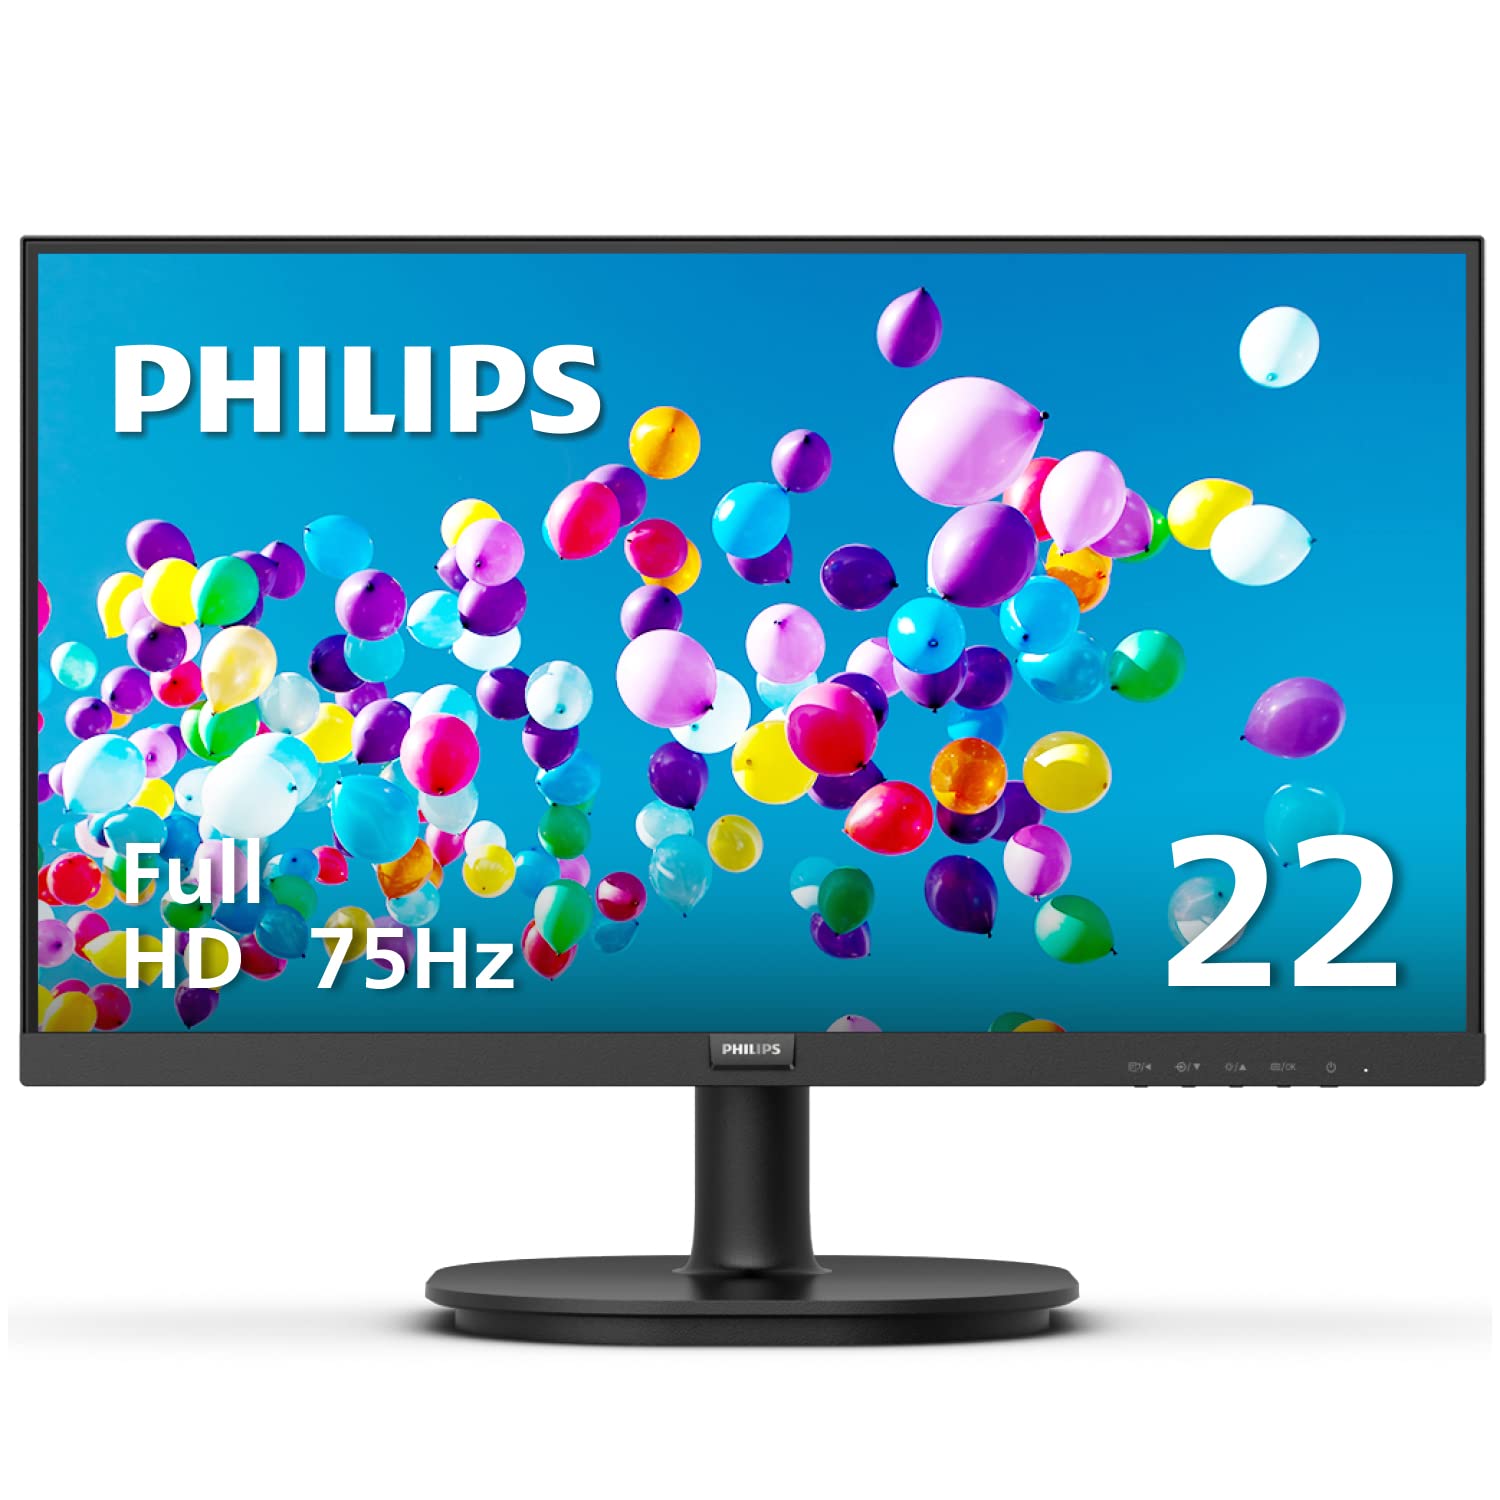 Philips Computer Monitors फिलिप्स प्योर 2...